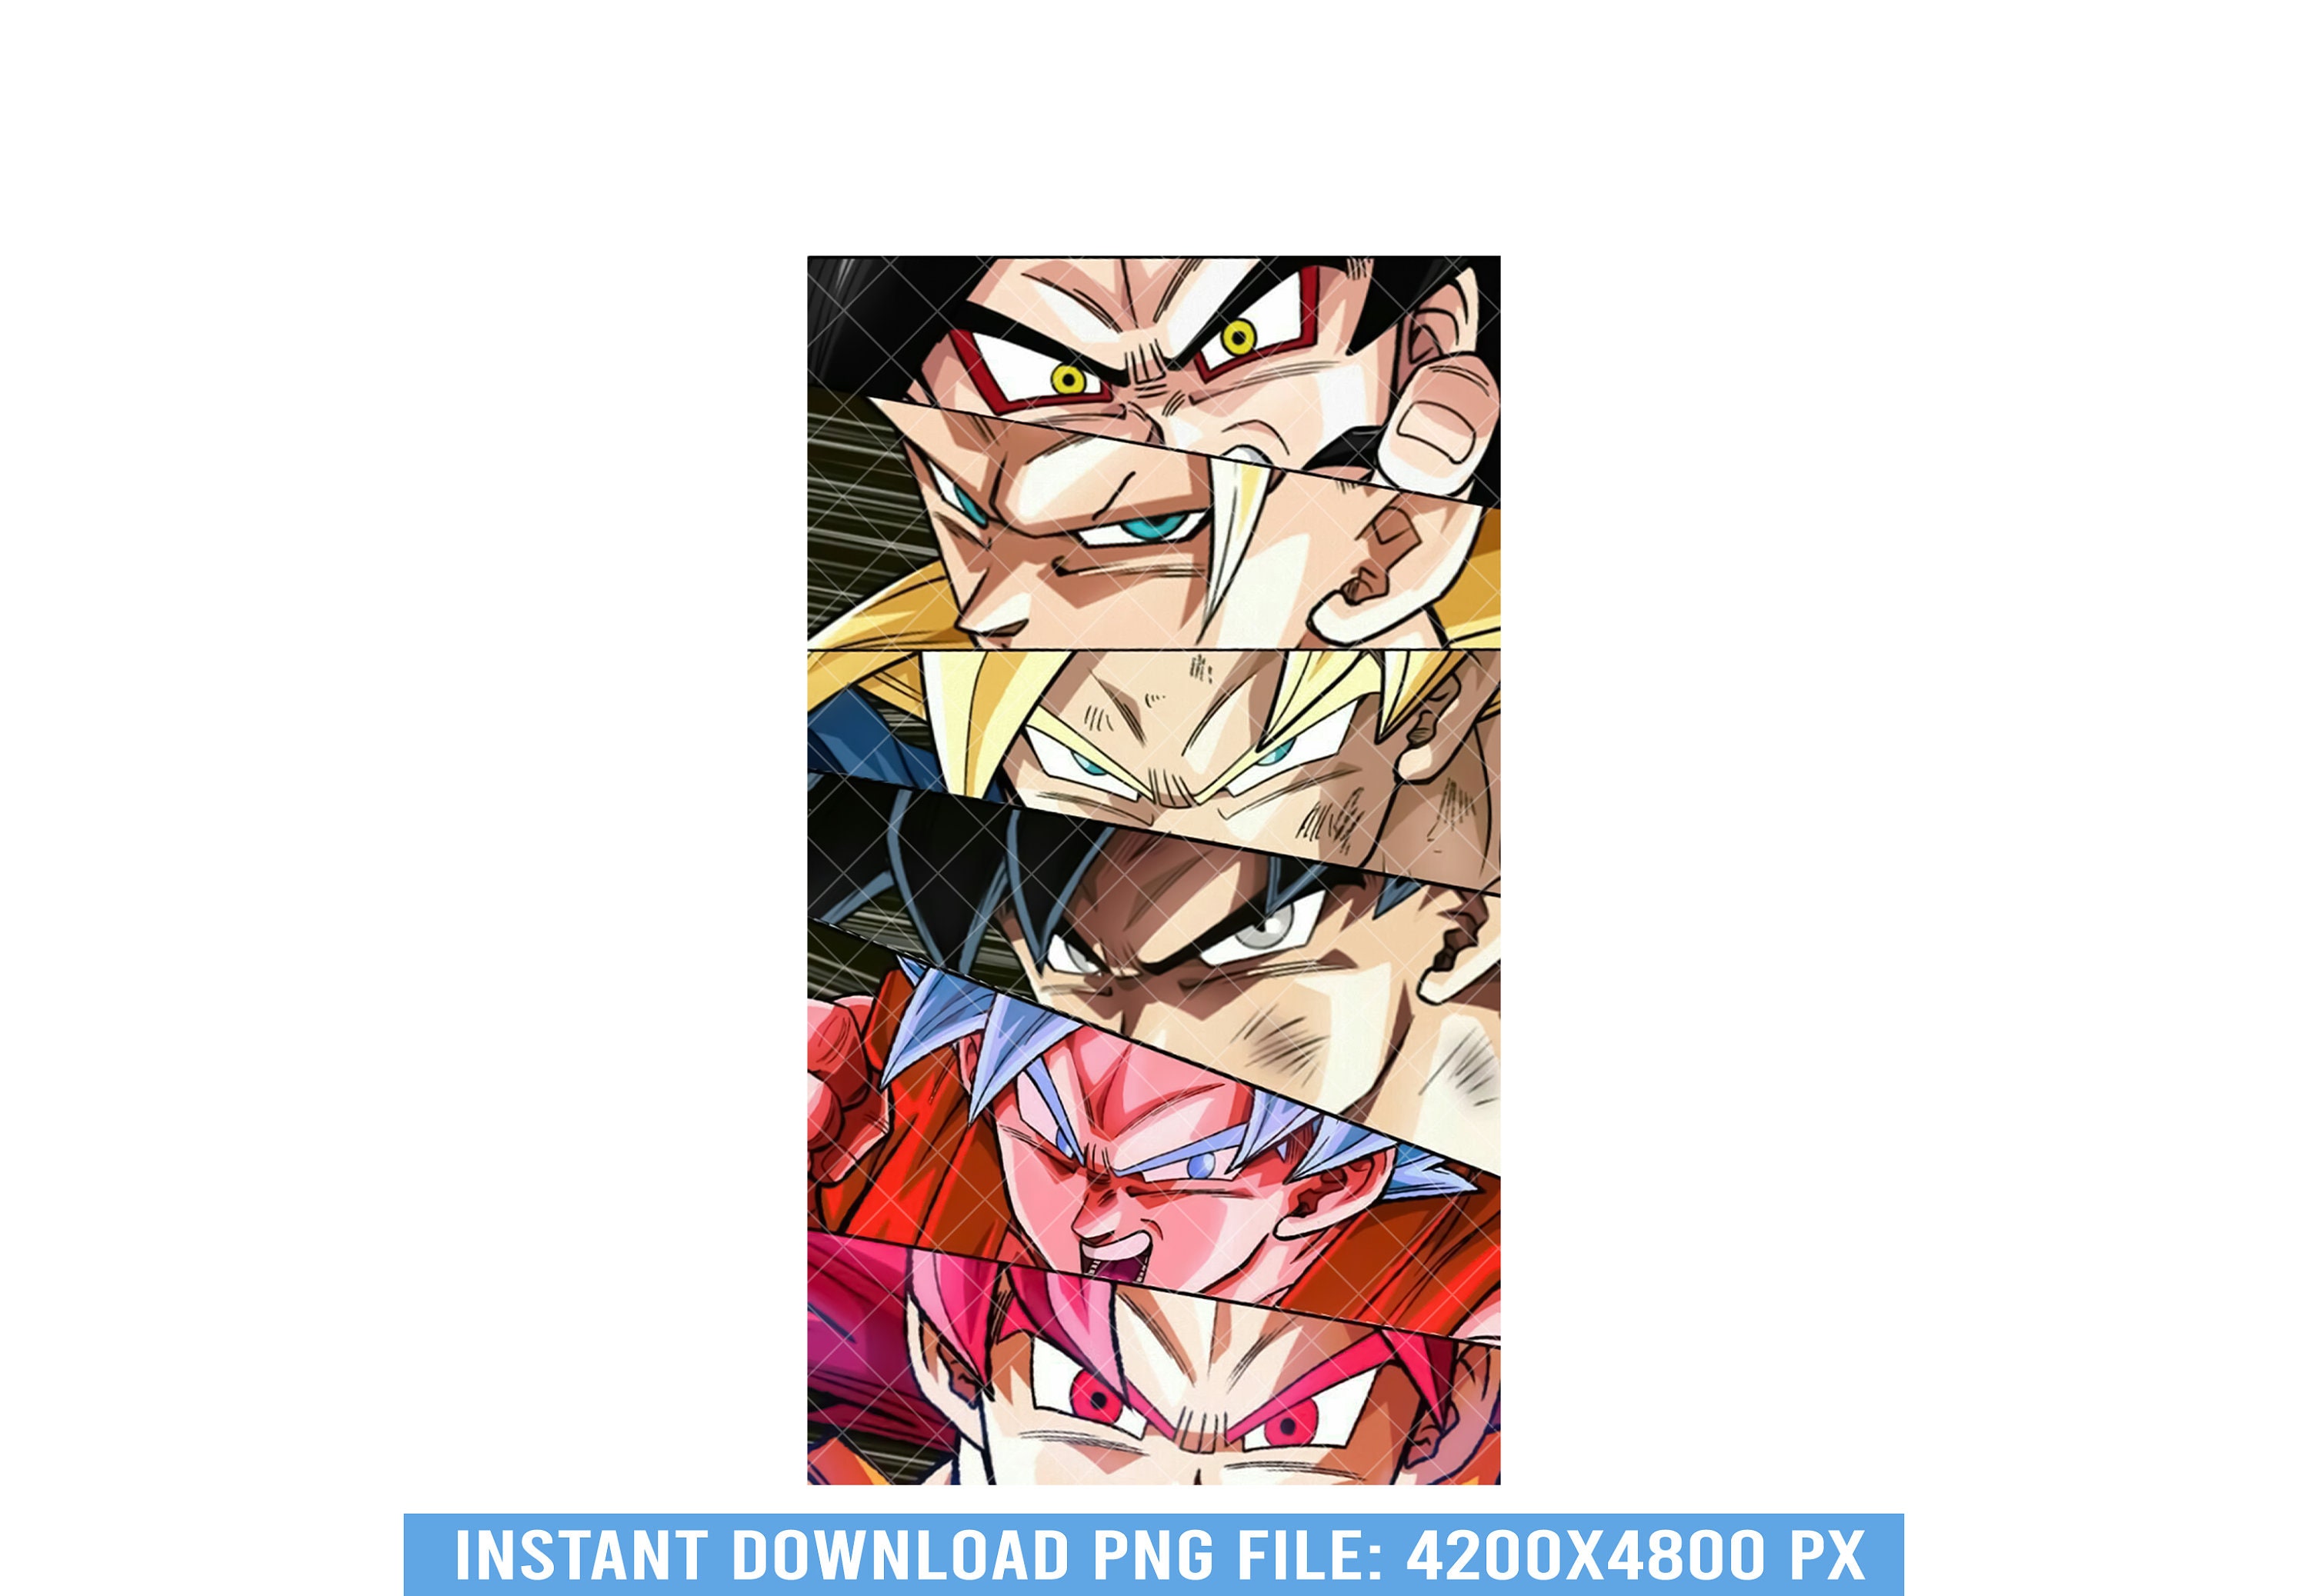 3D Japanese Anime Wallpaper Dragon Ball Supercharacter Poster